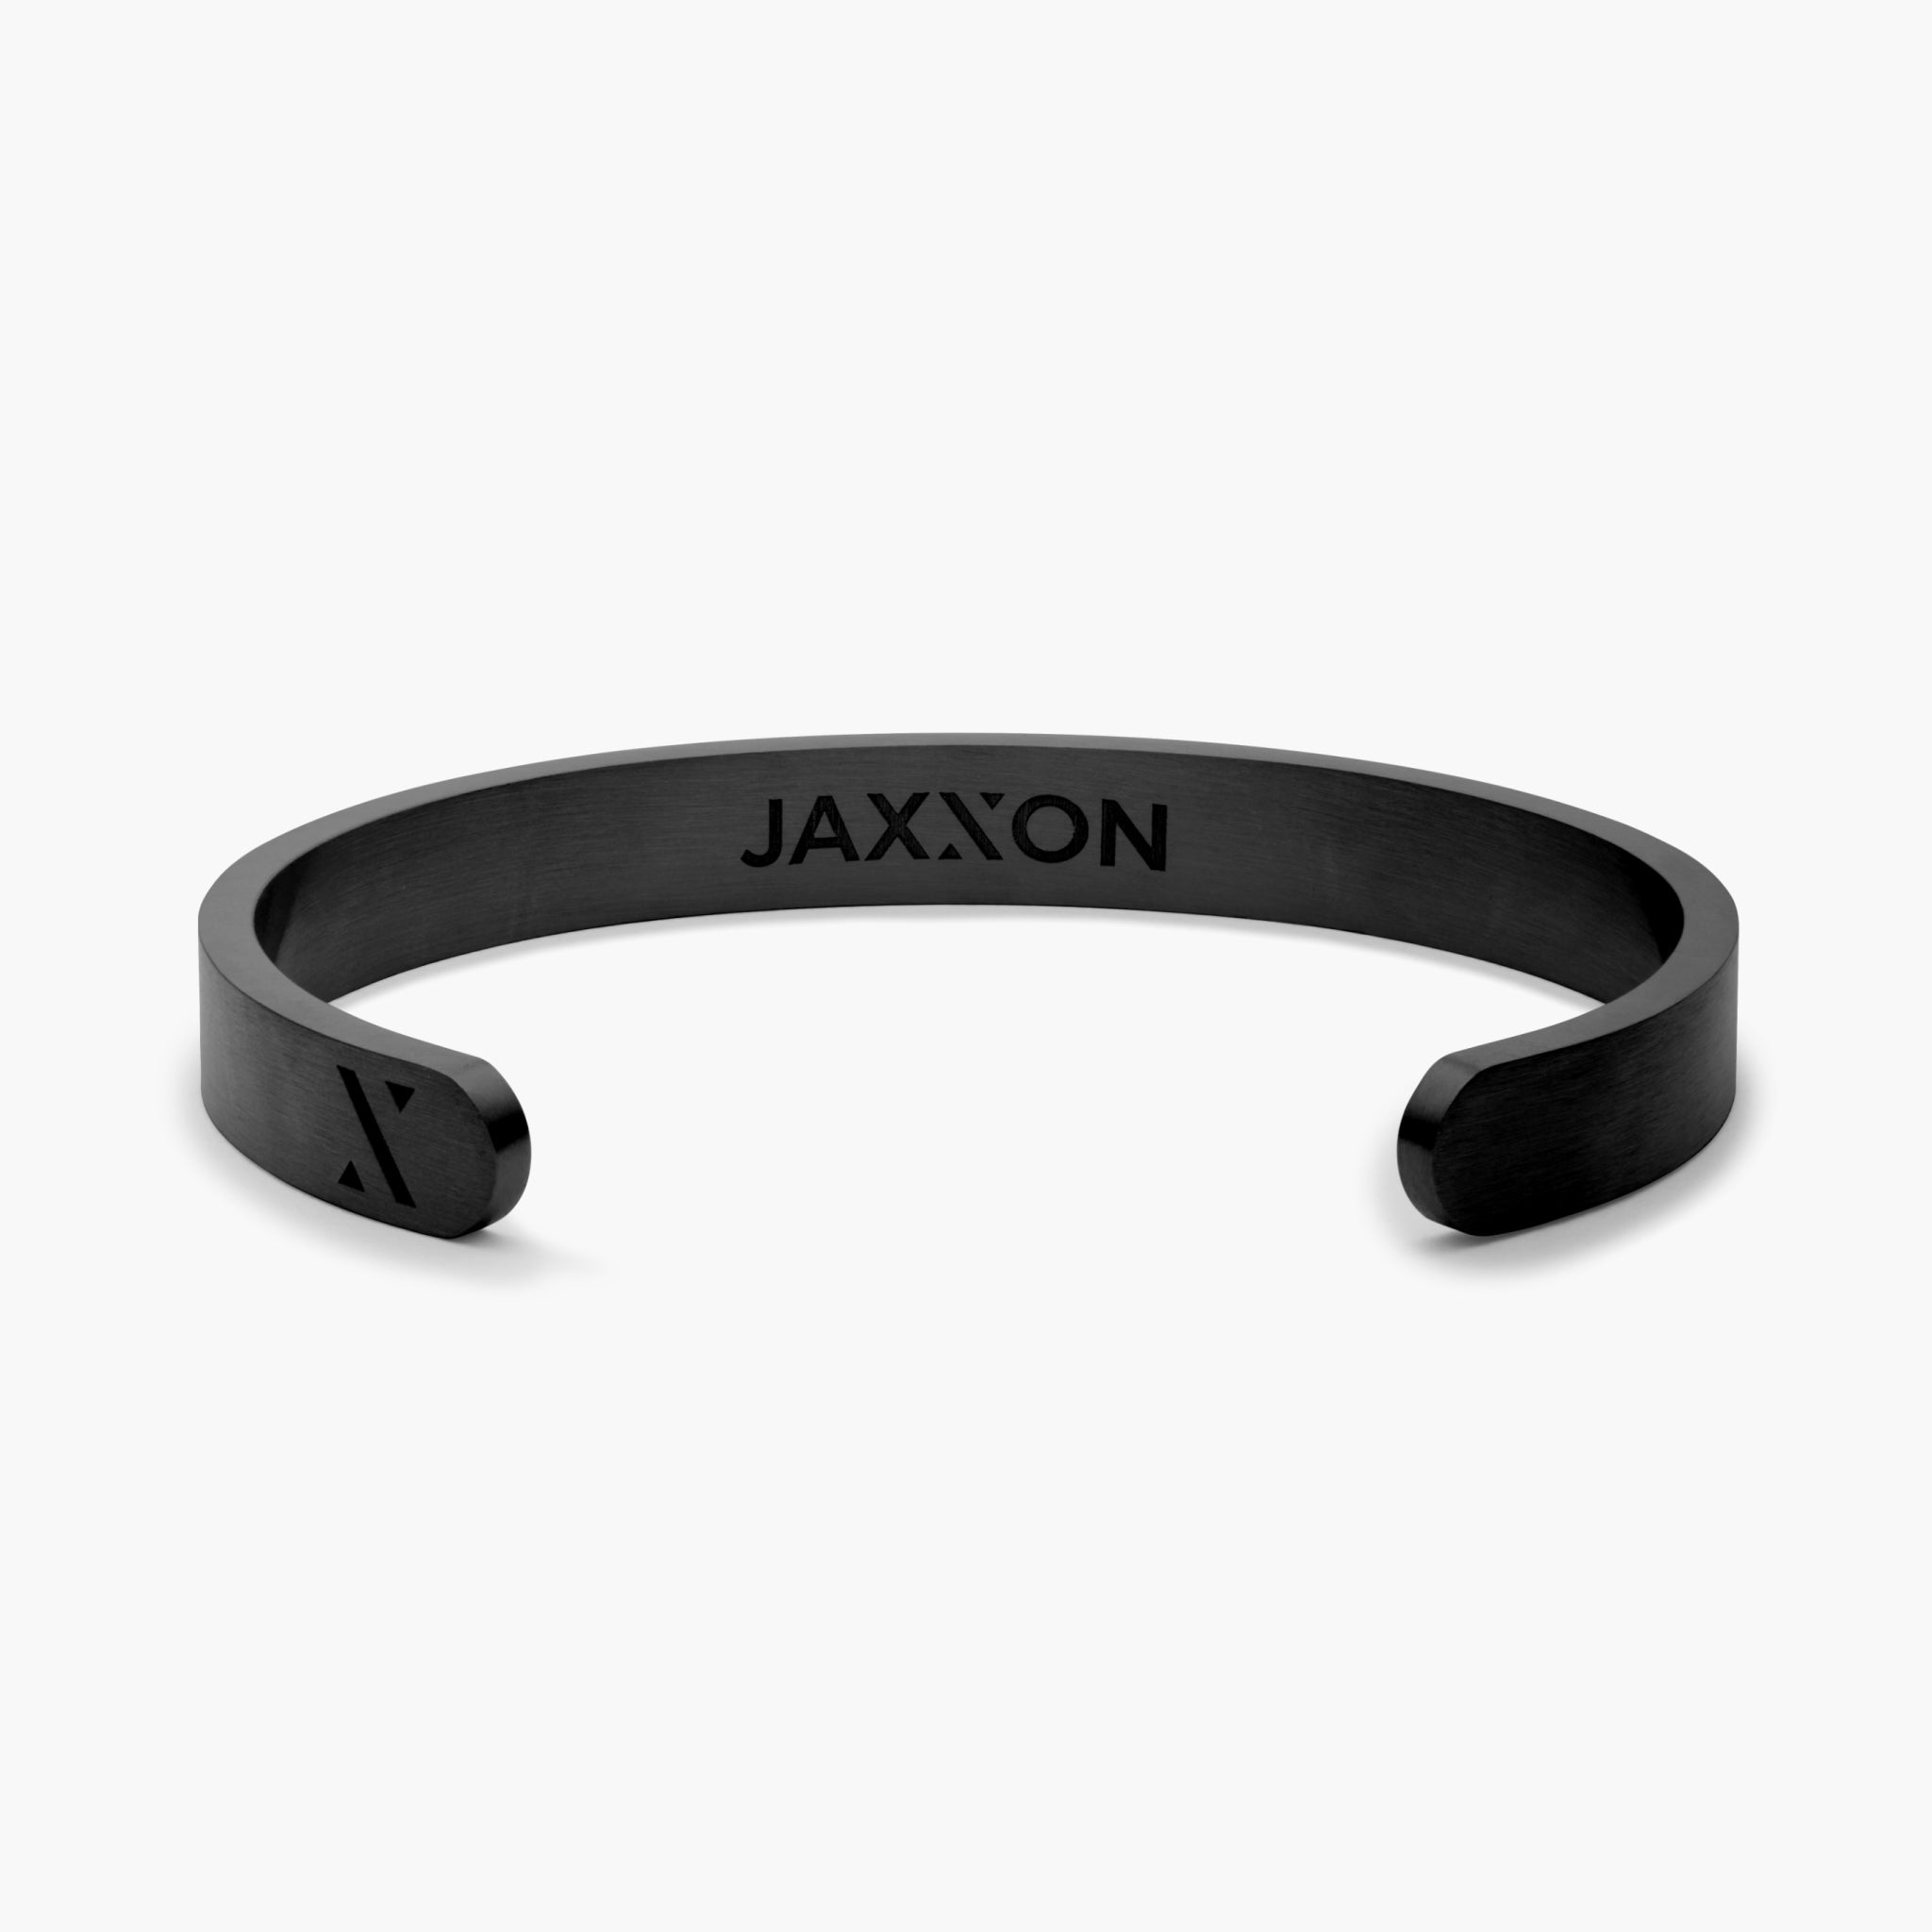 JAXXON Premium Black Bracelet Stack